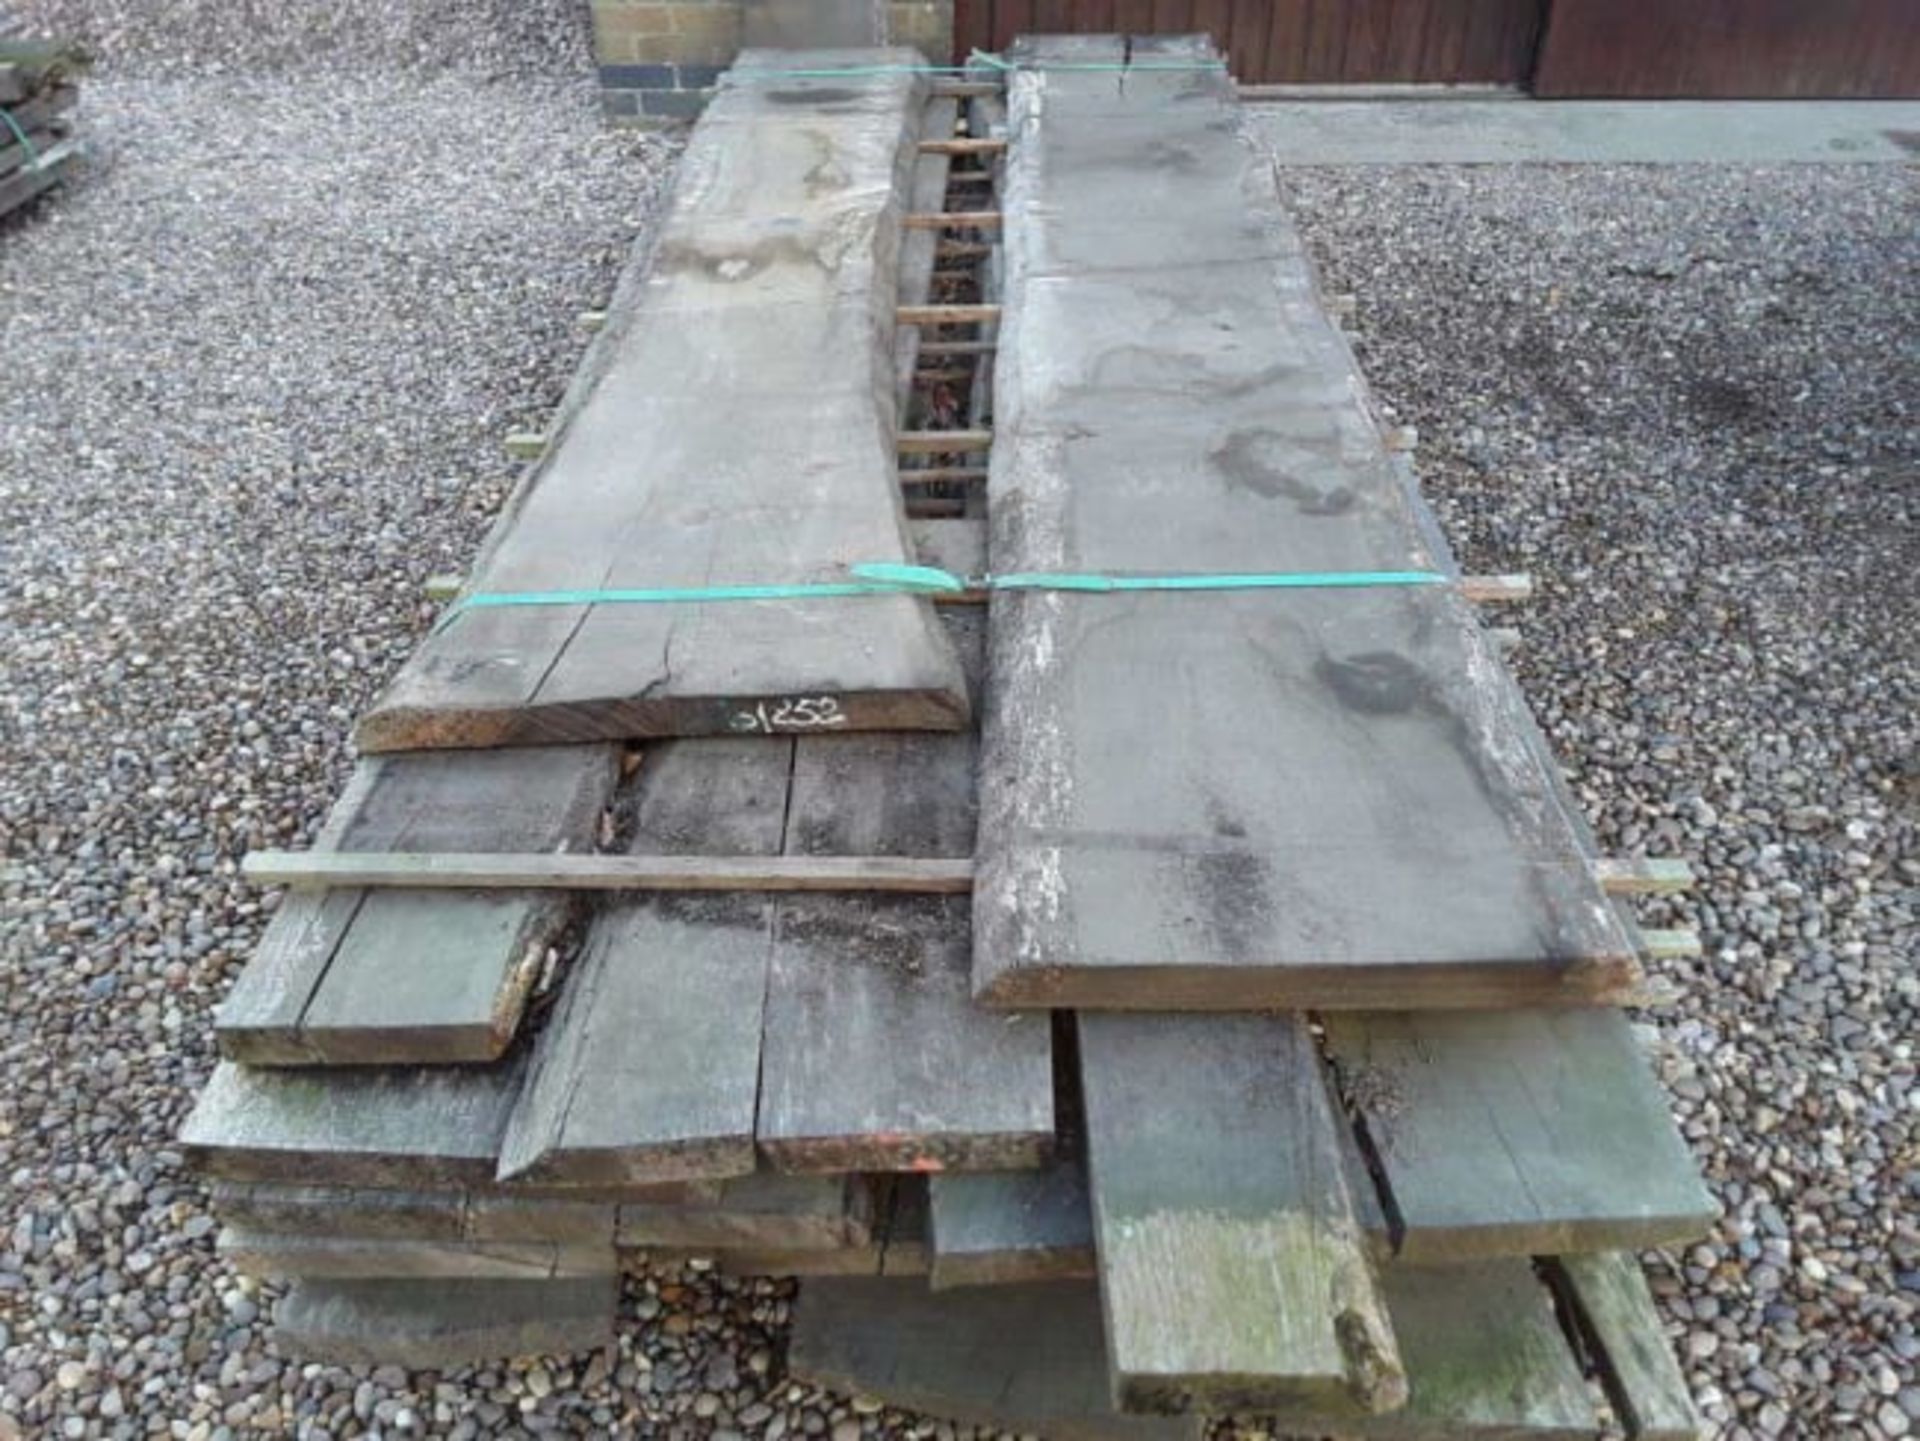 19 x Hardwood Timber Air Dried Sawn Waney Edge/ Live Edge English Oak Slabs/ Boards - Image 7 of 8